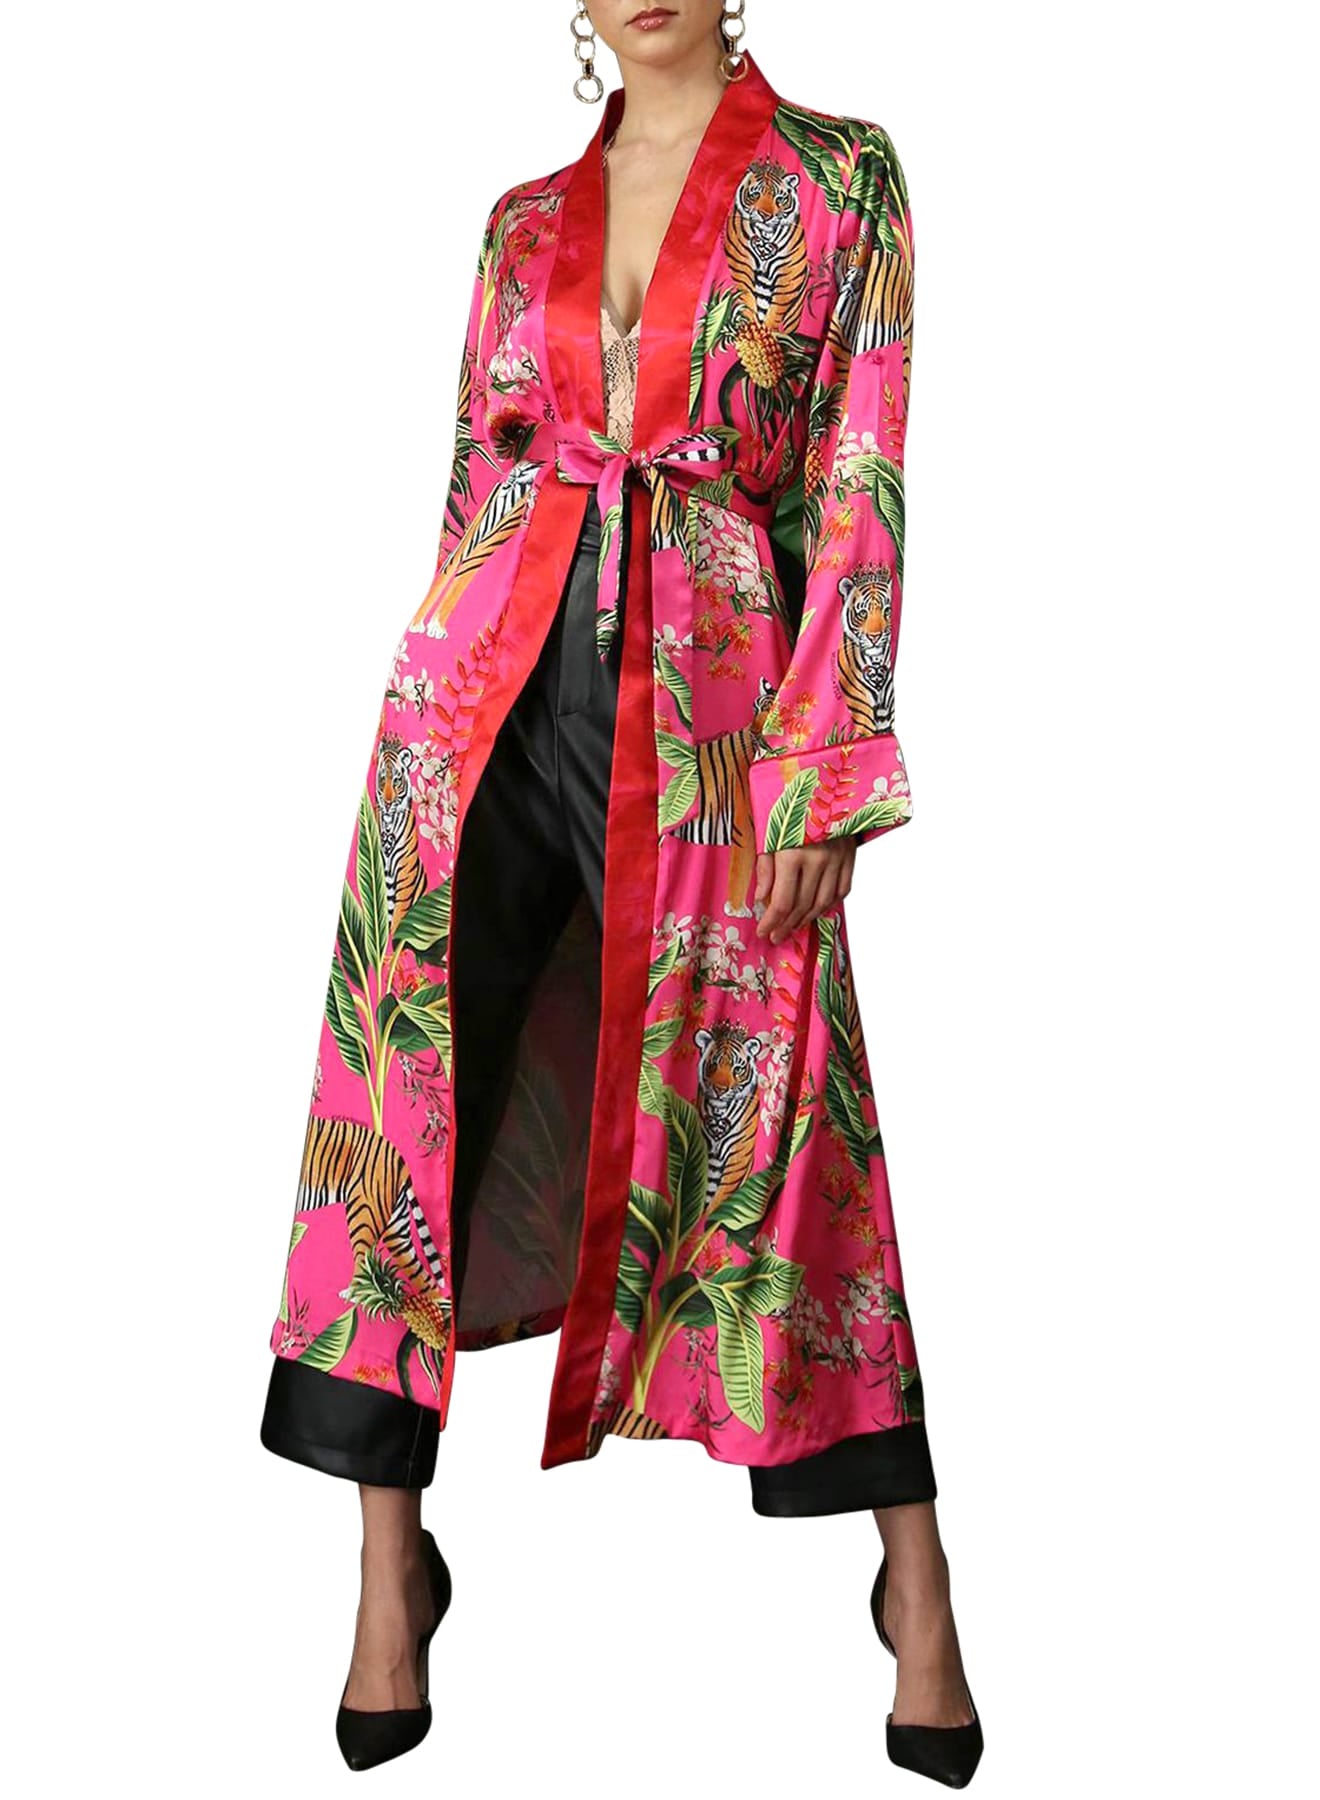 "Kyle X Shahida" "silk kimono robes for women" "luxury kimono" "printed silk robe" "kimono silk robe women's" 